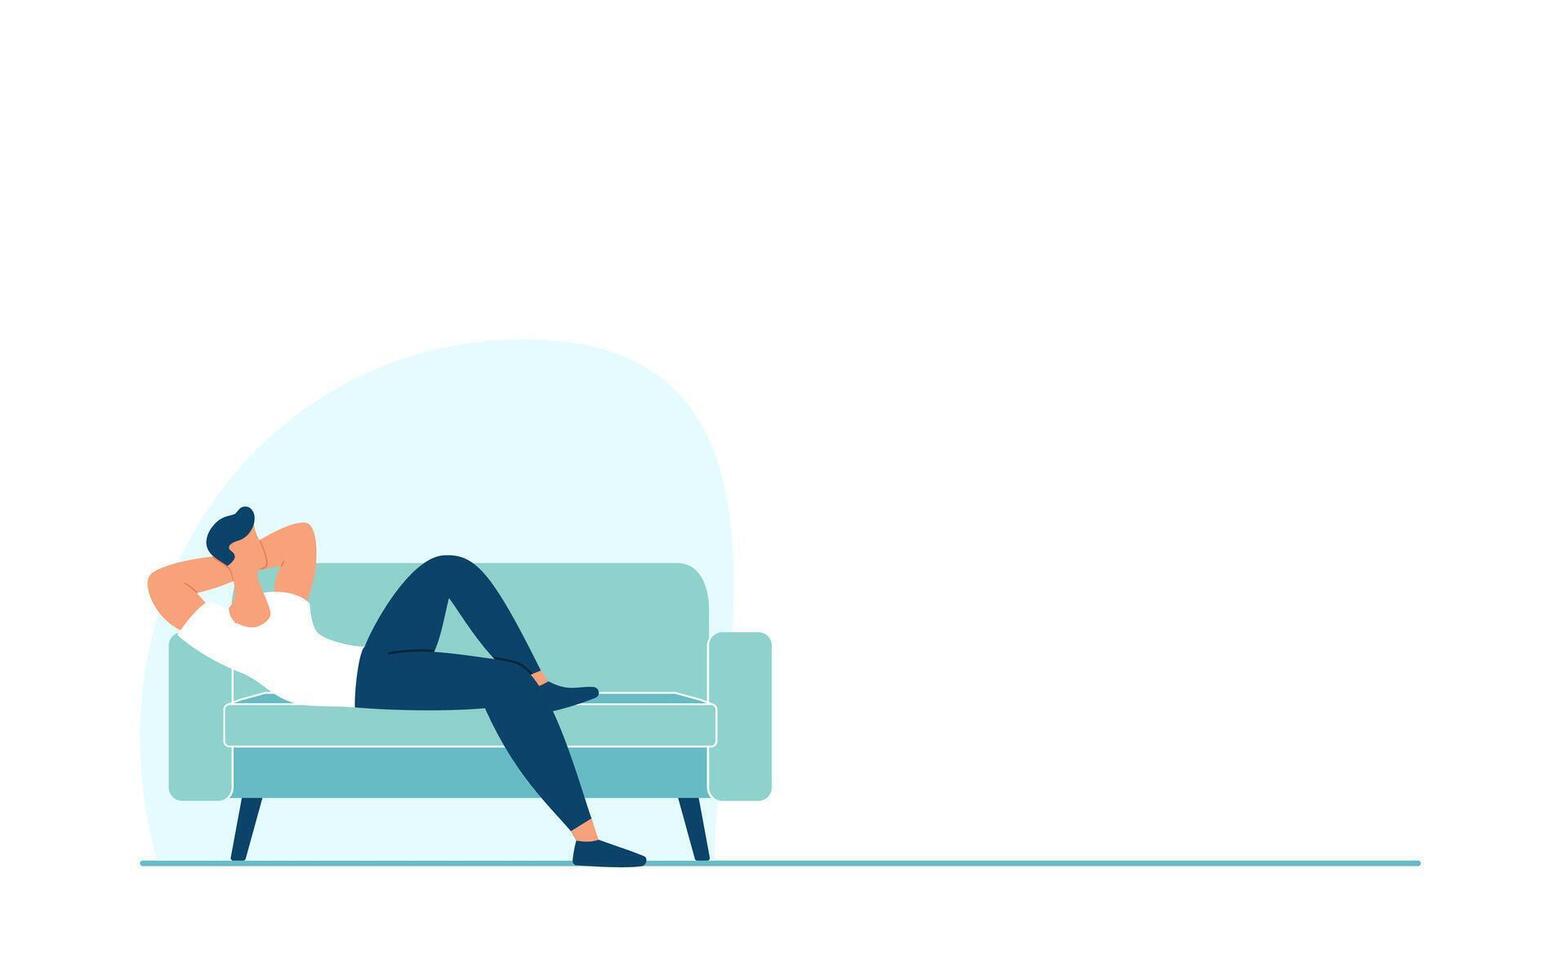 personaje acostado en sofá y relajante, relajado hombre en sofá. descansando, perezoso día, fin de semana. dilación concepto. contento soñando de moda plano vector ilustración.